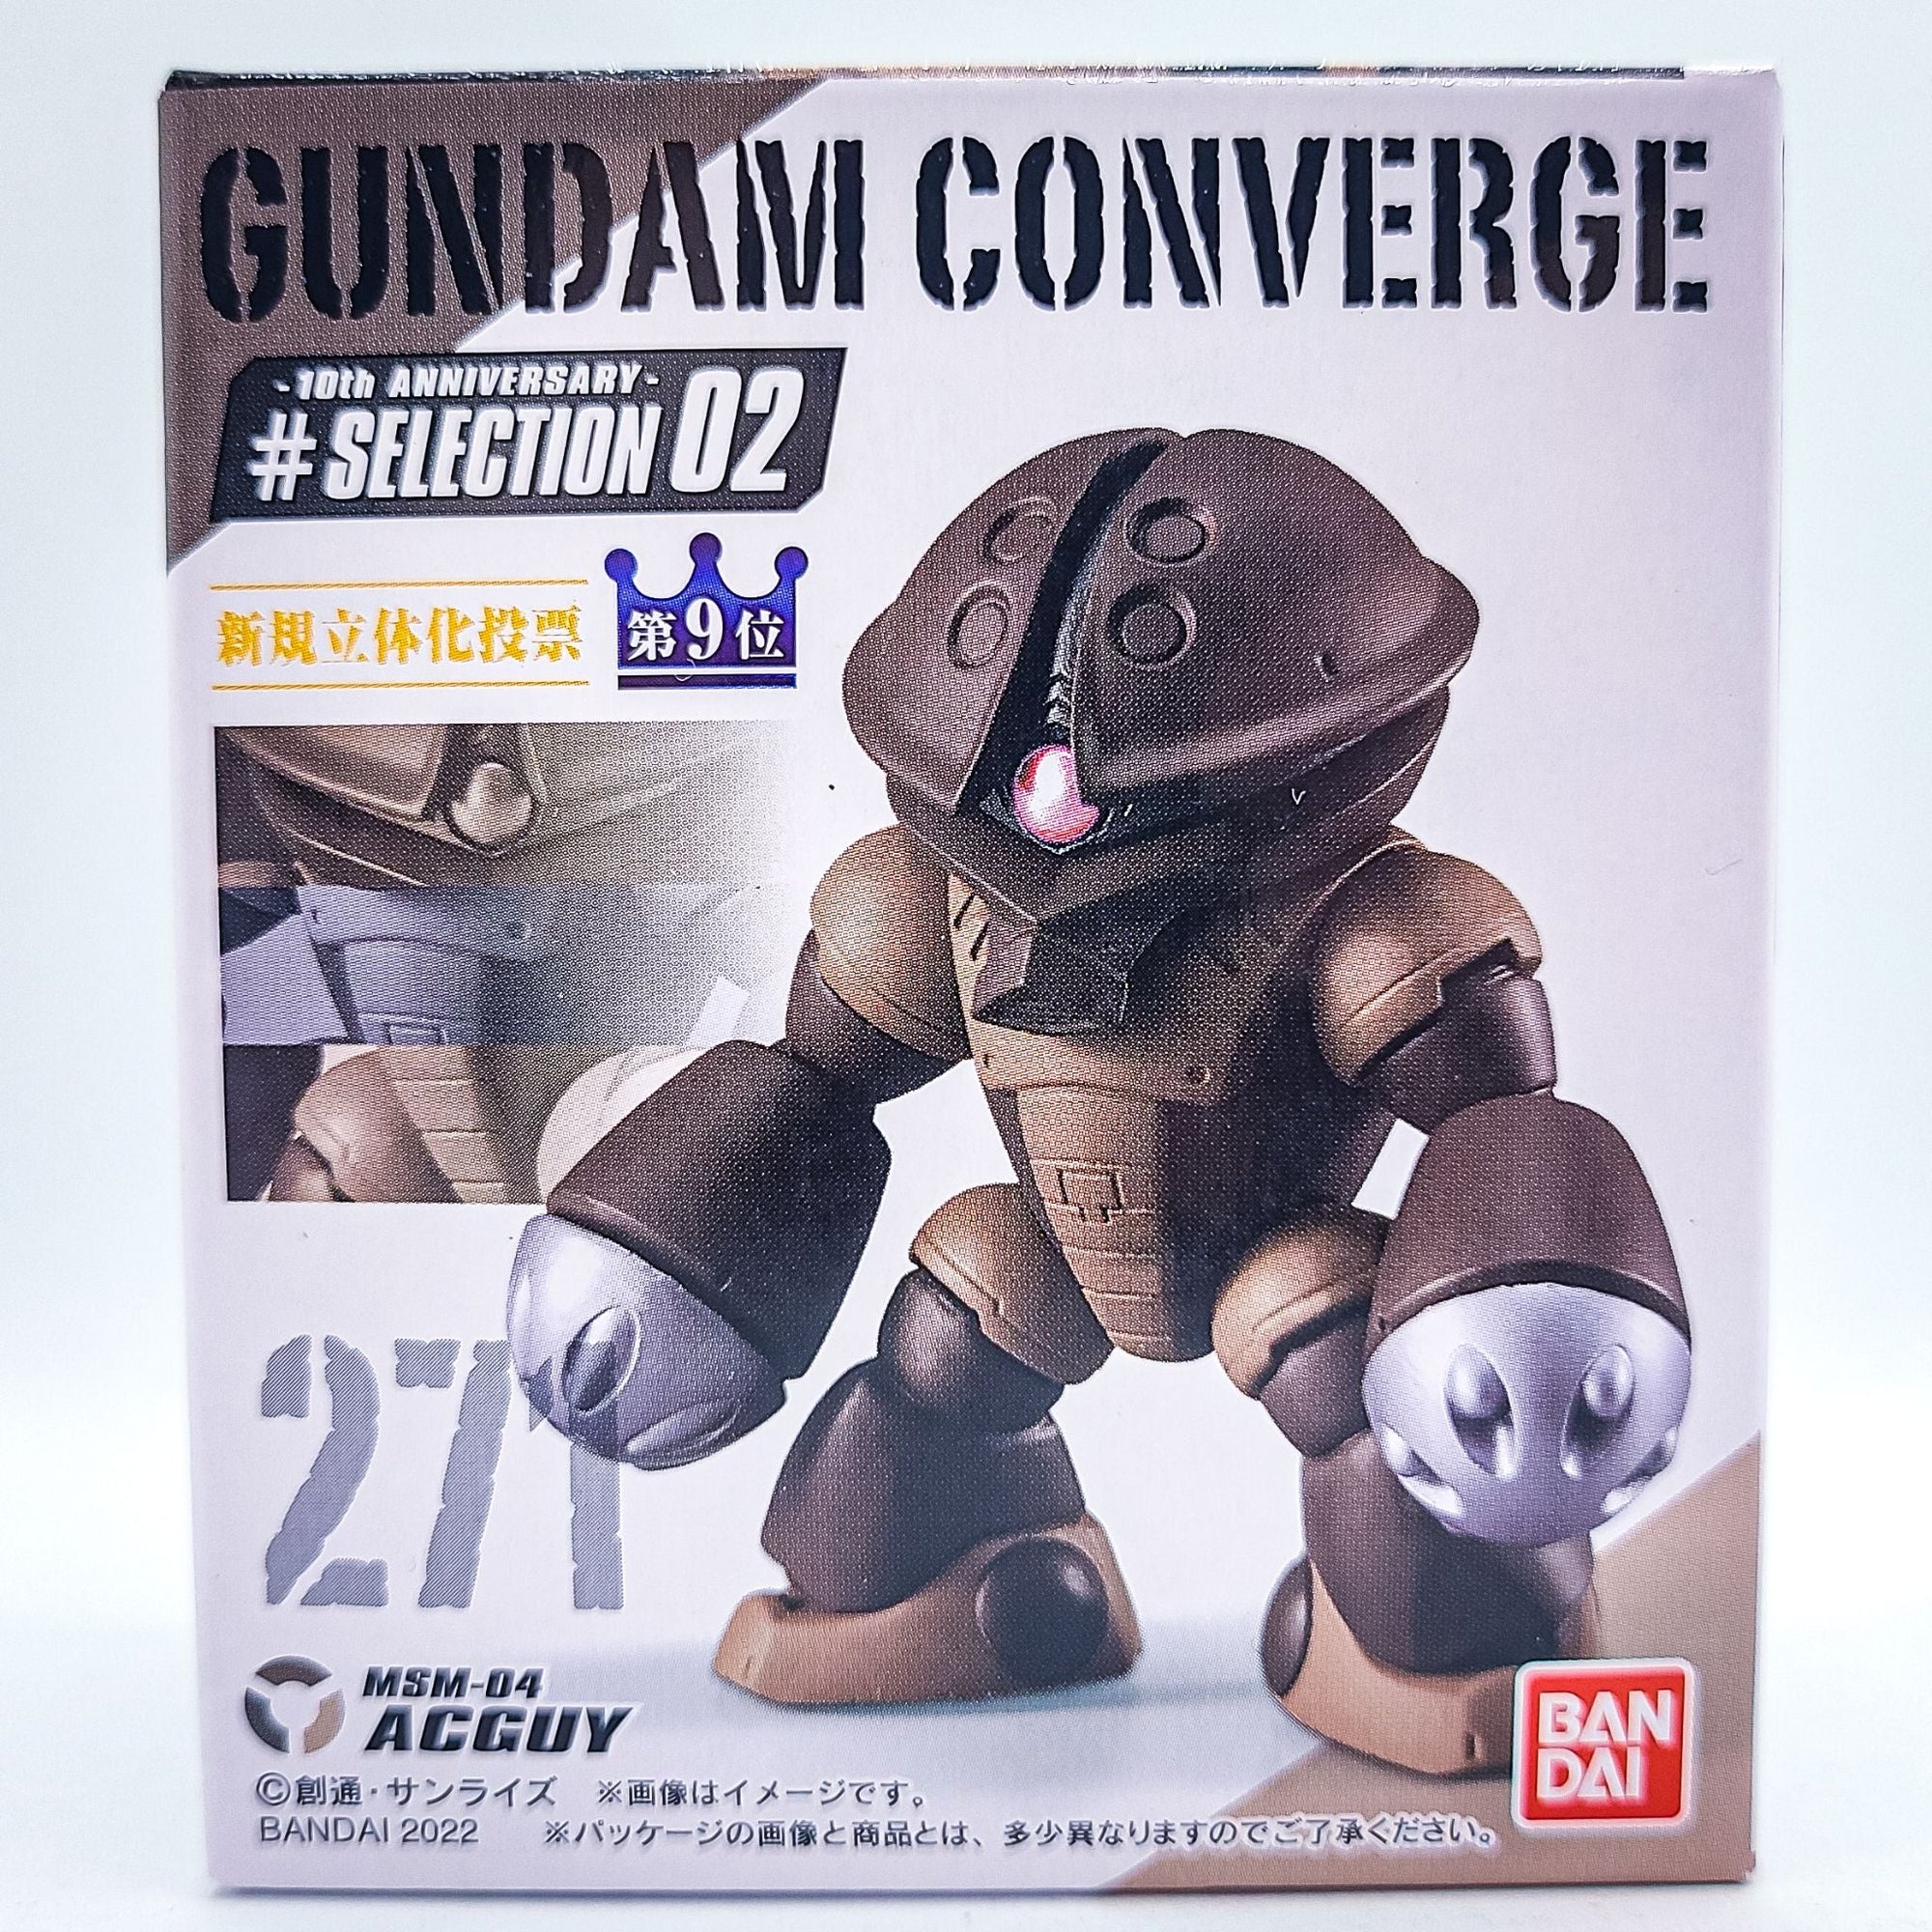 Gundam Converge #271 ACGUY by Bandai - 1